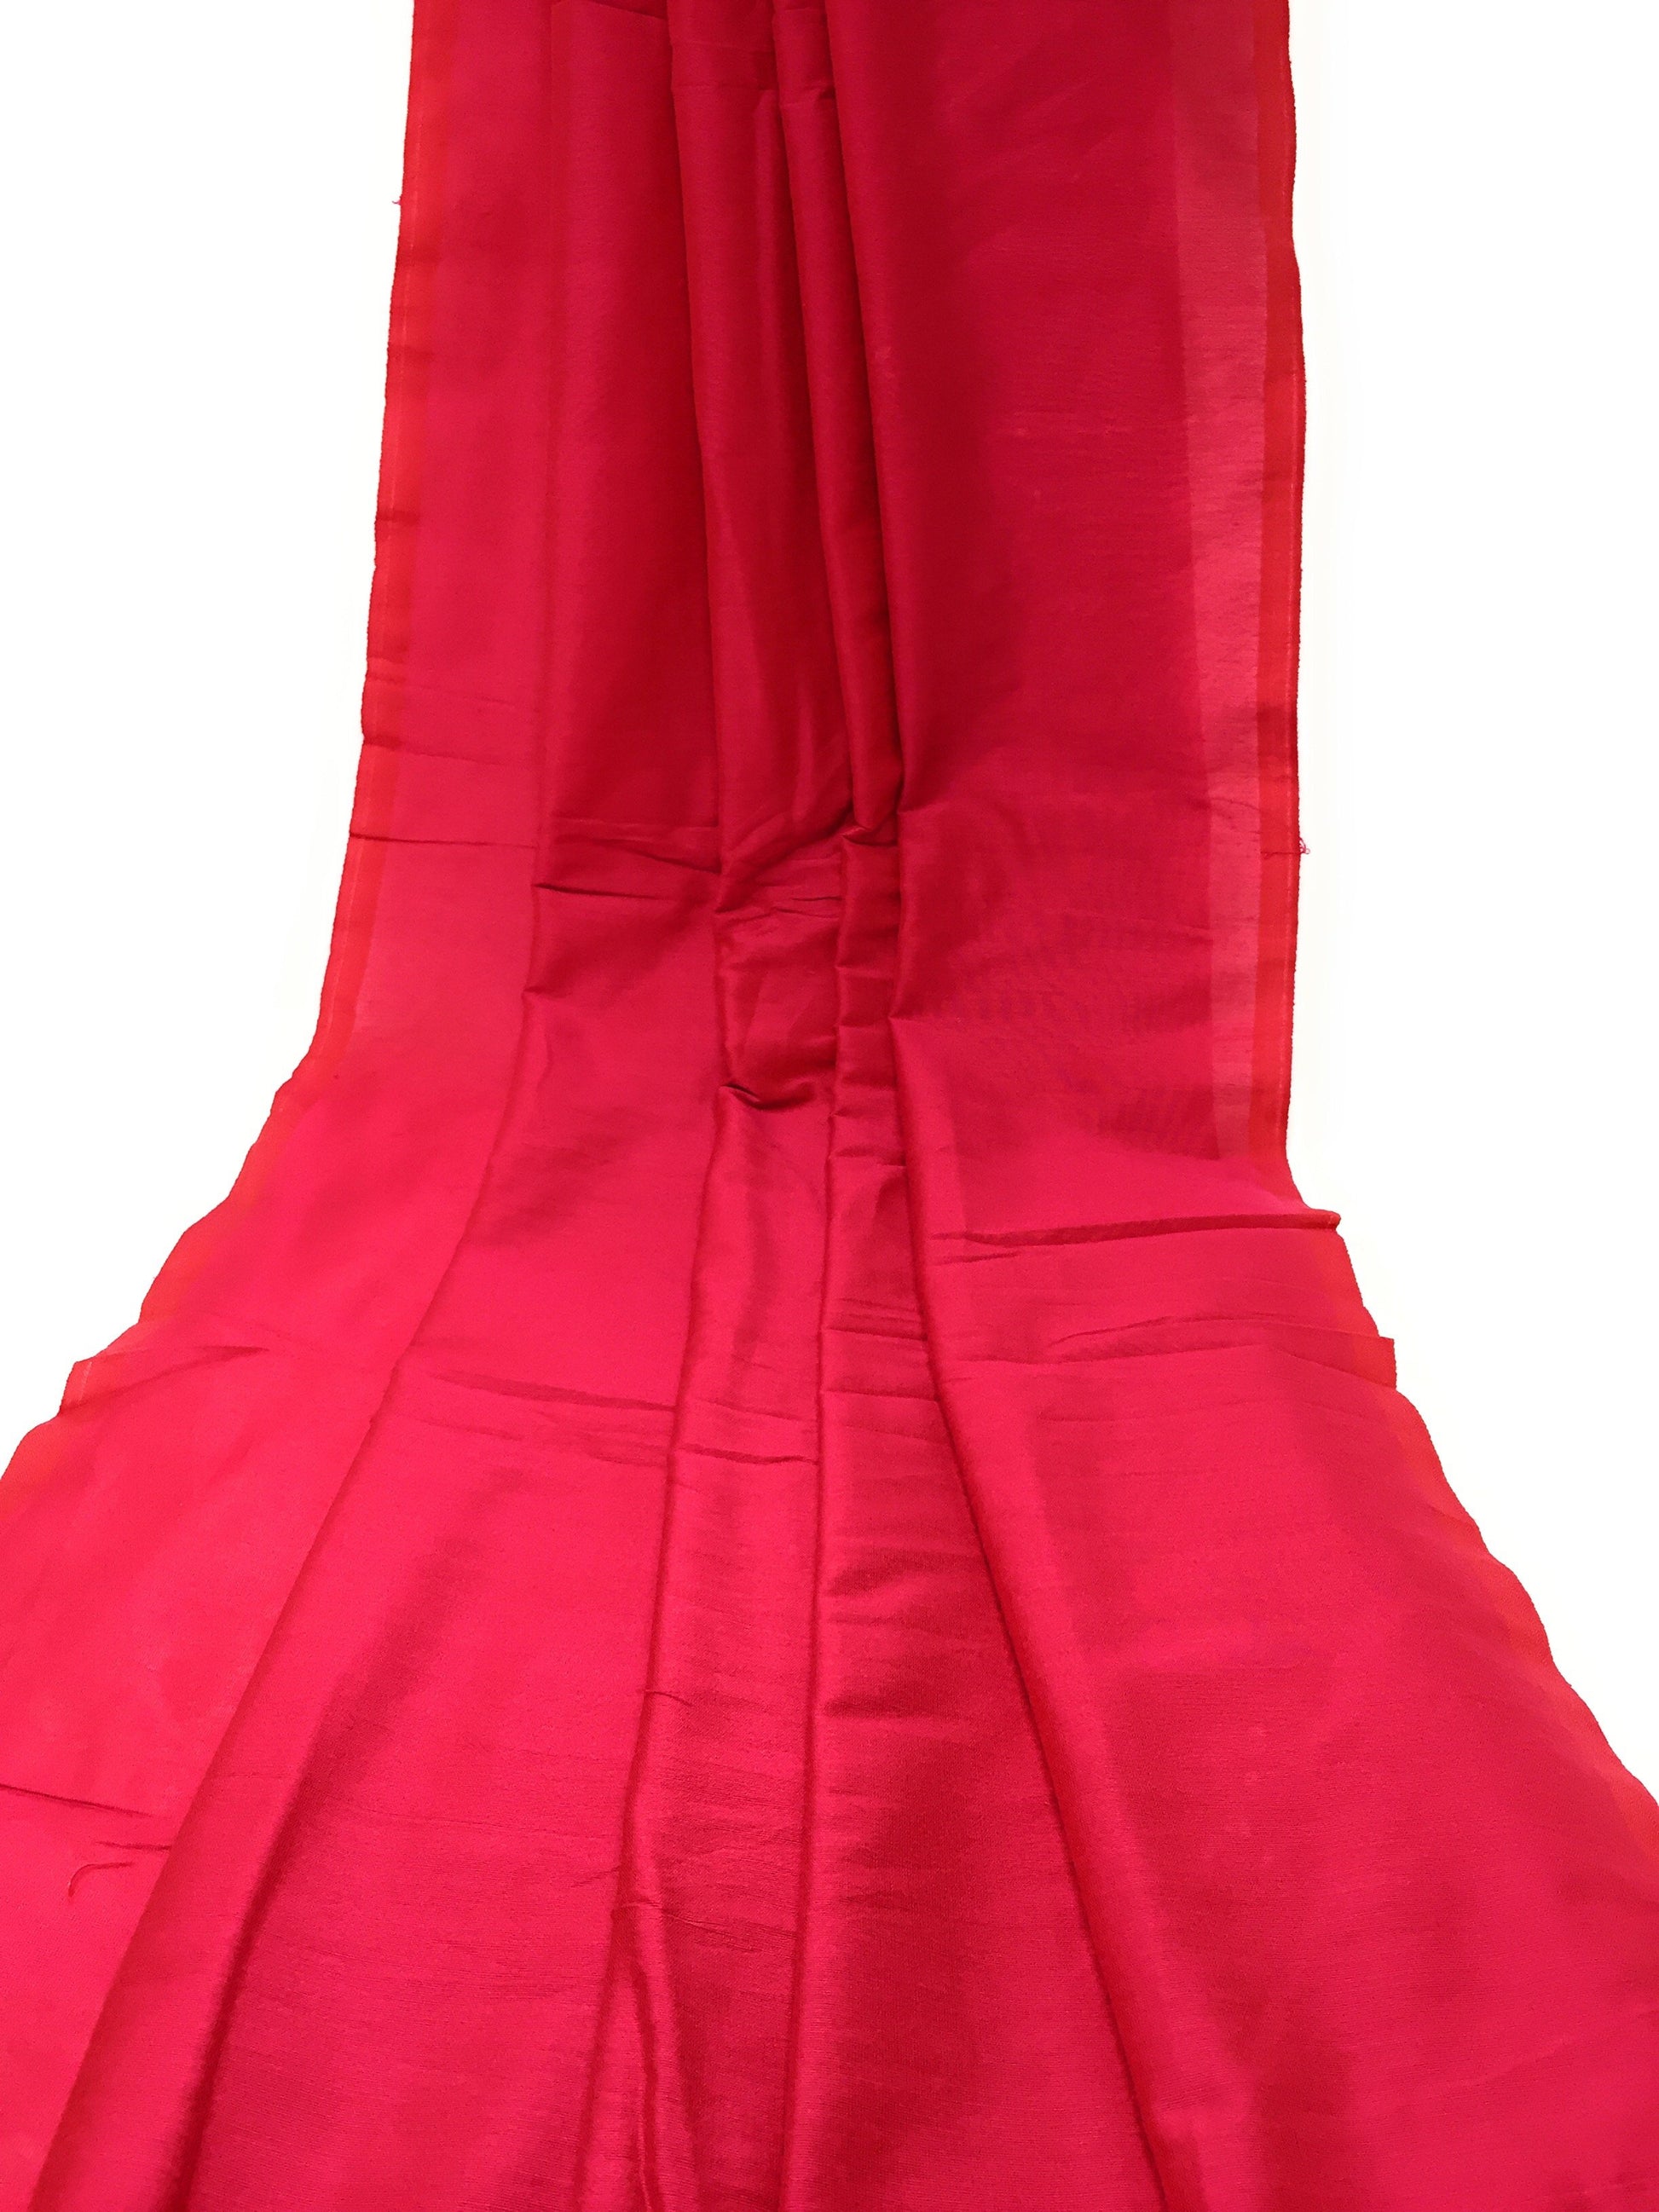 Rani Pink Cotton Silk Dress Material